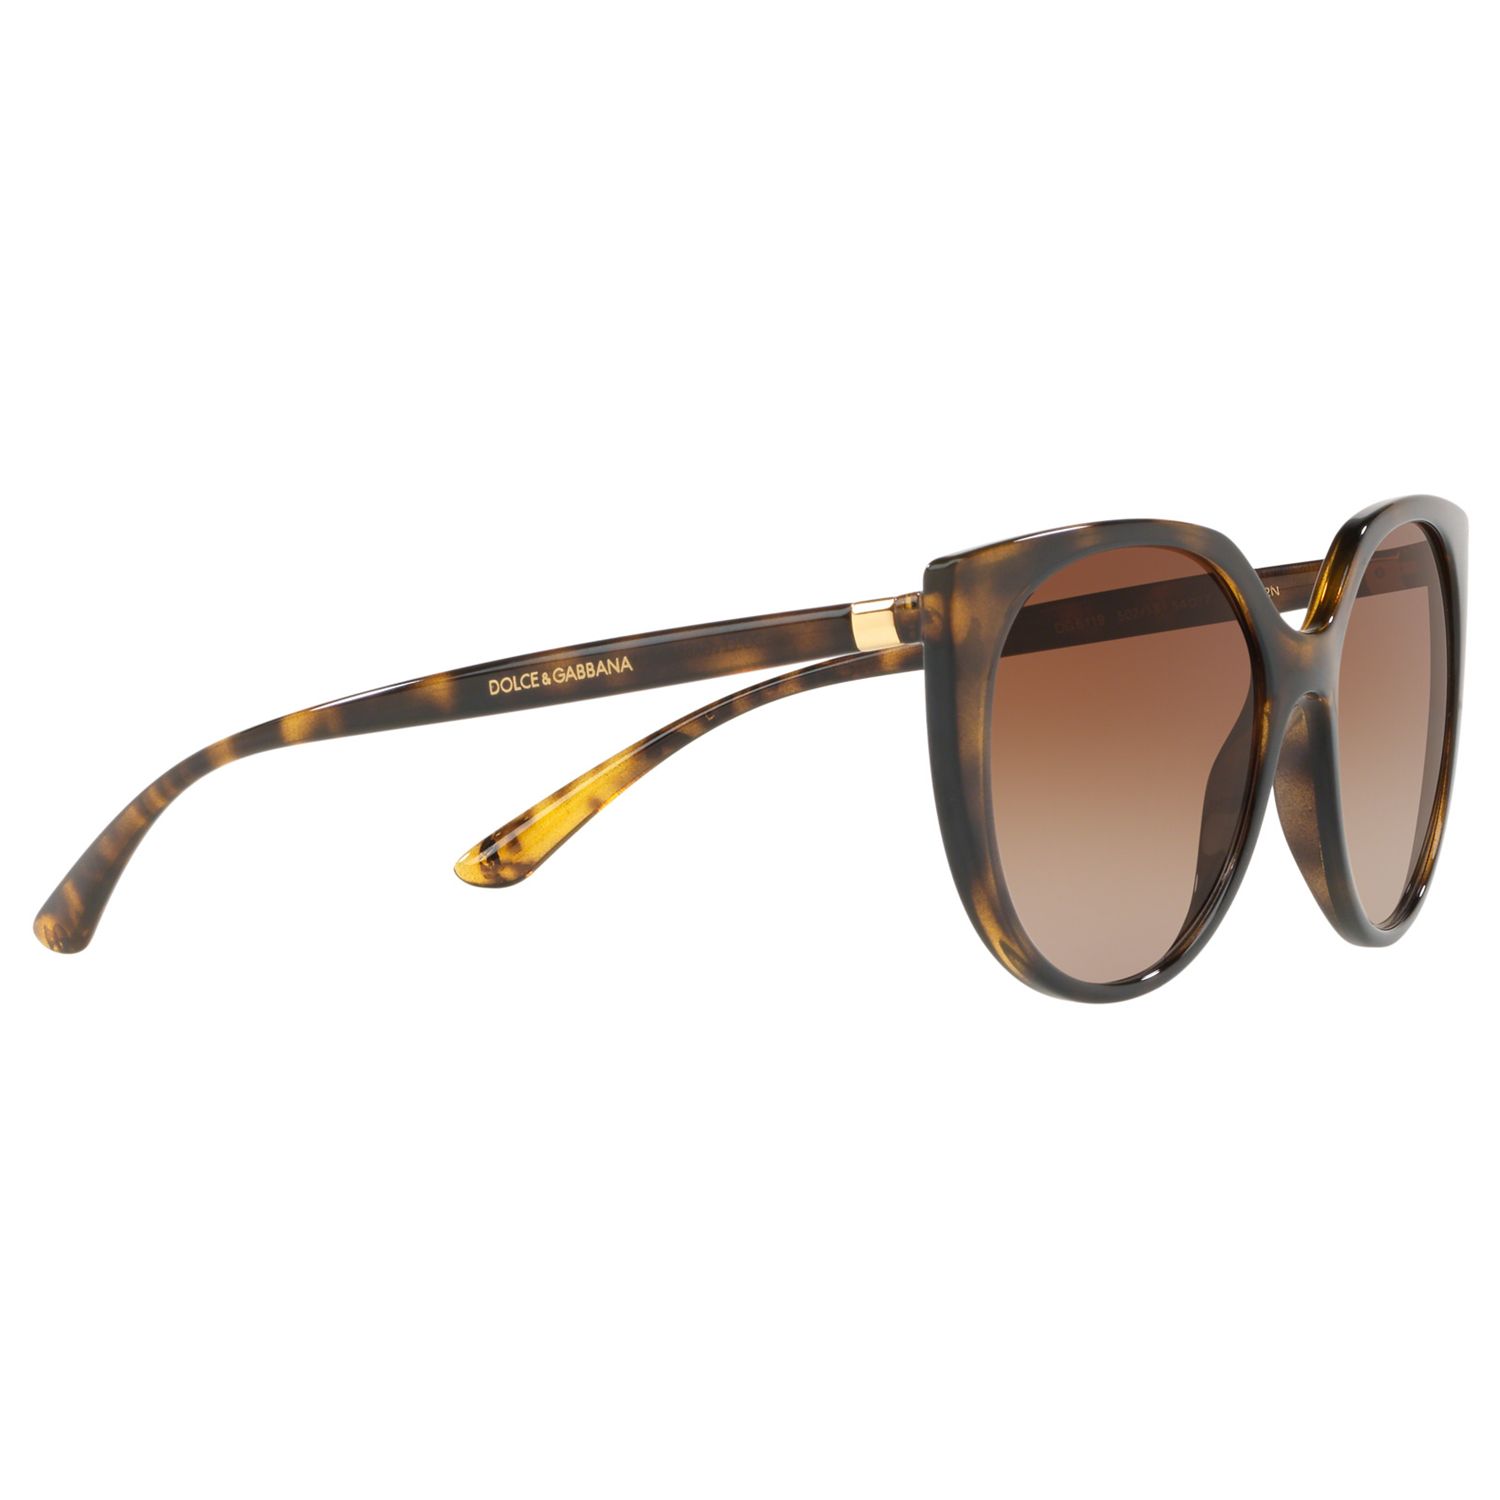 Dolce & Gabbana DG6119 Women's Oval Sunglasses, Tortoise/Brown Gradient